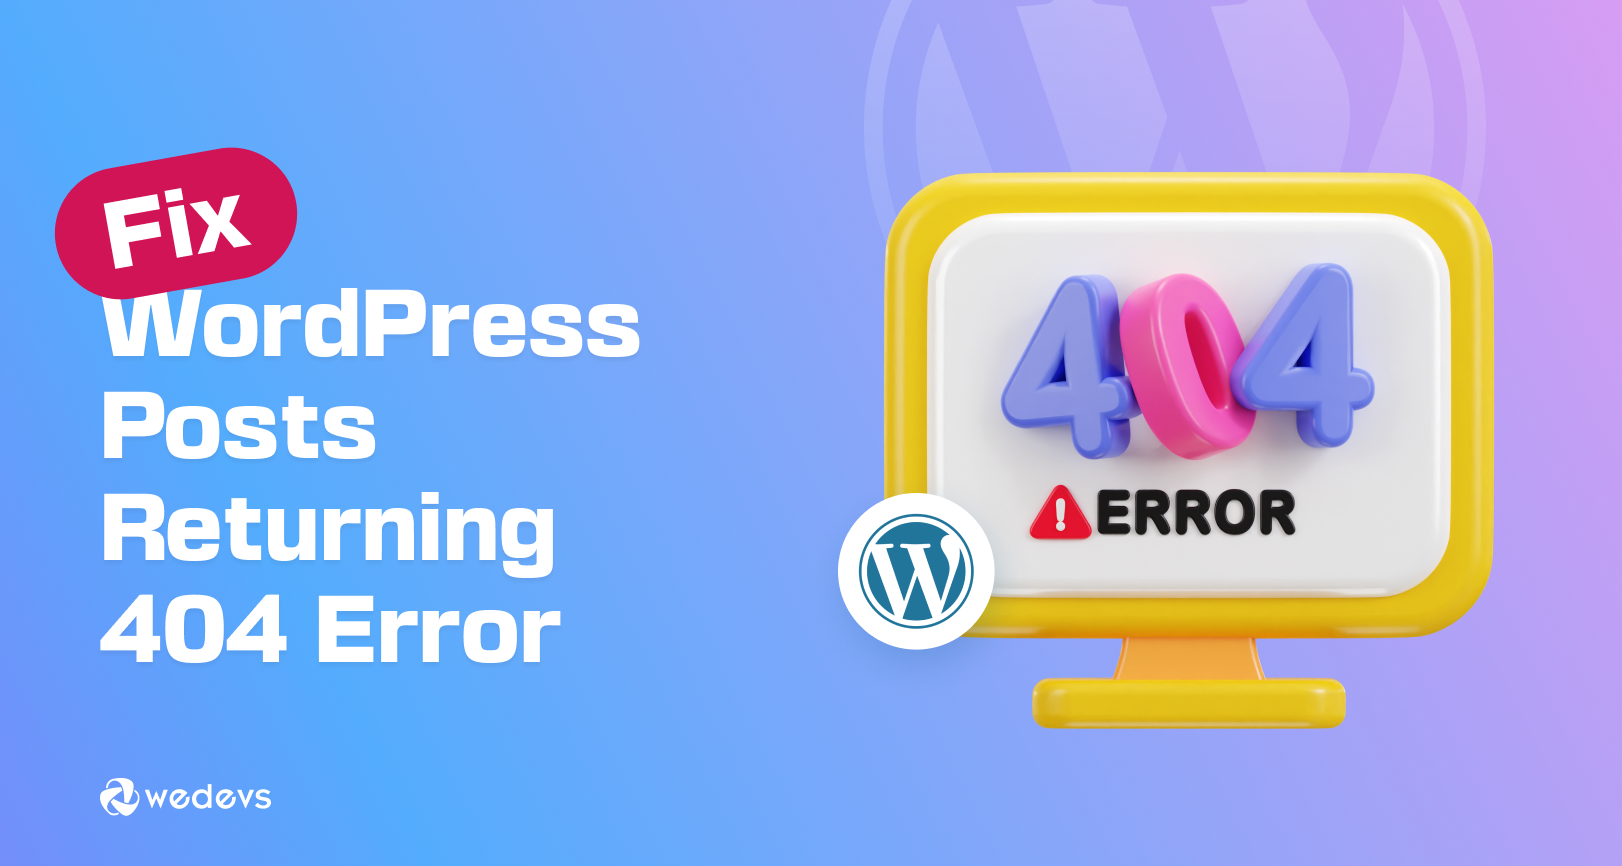 How to Fix WordPress Posts Returning 404 Errors